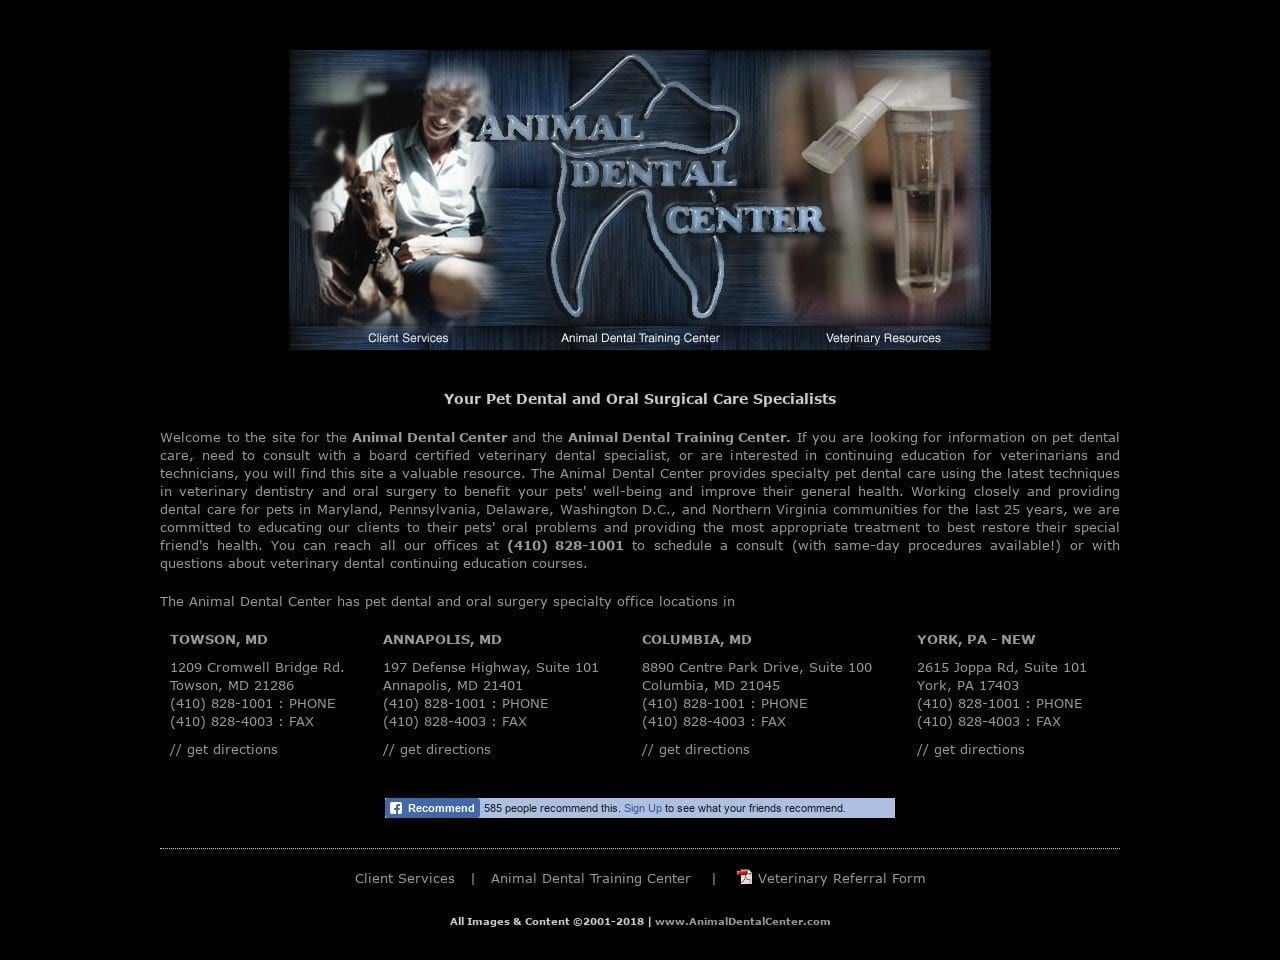 Animal Dental Center Website Screenshot from animaldentalcenter.com